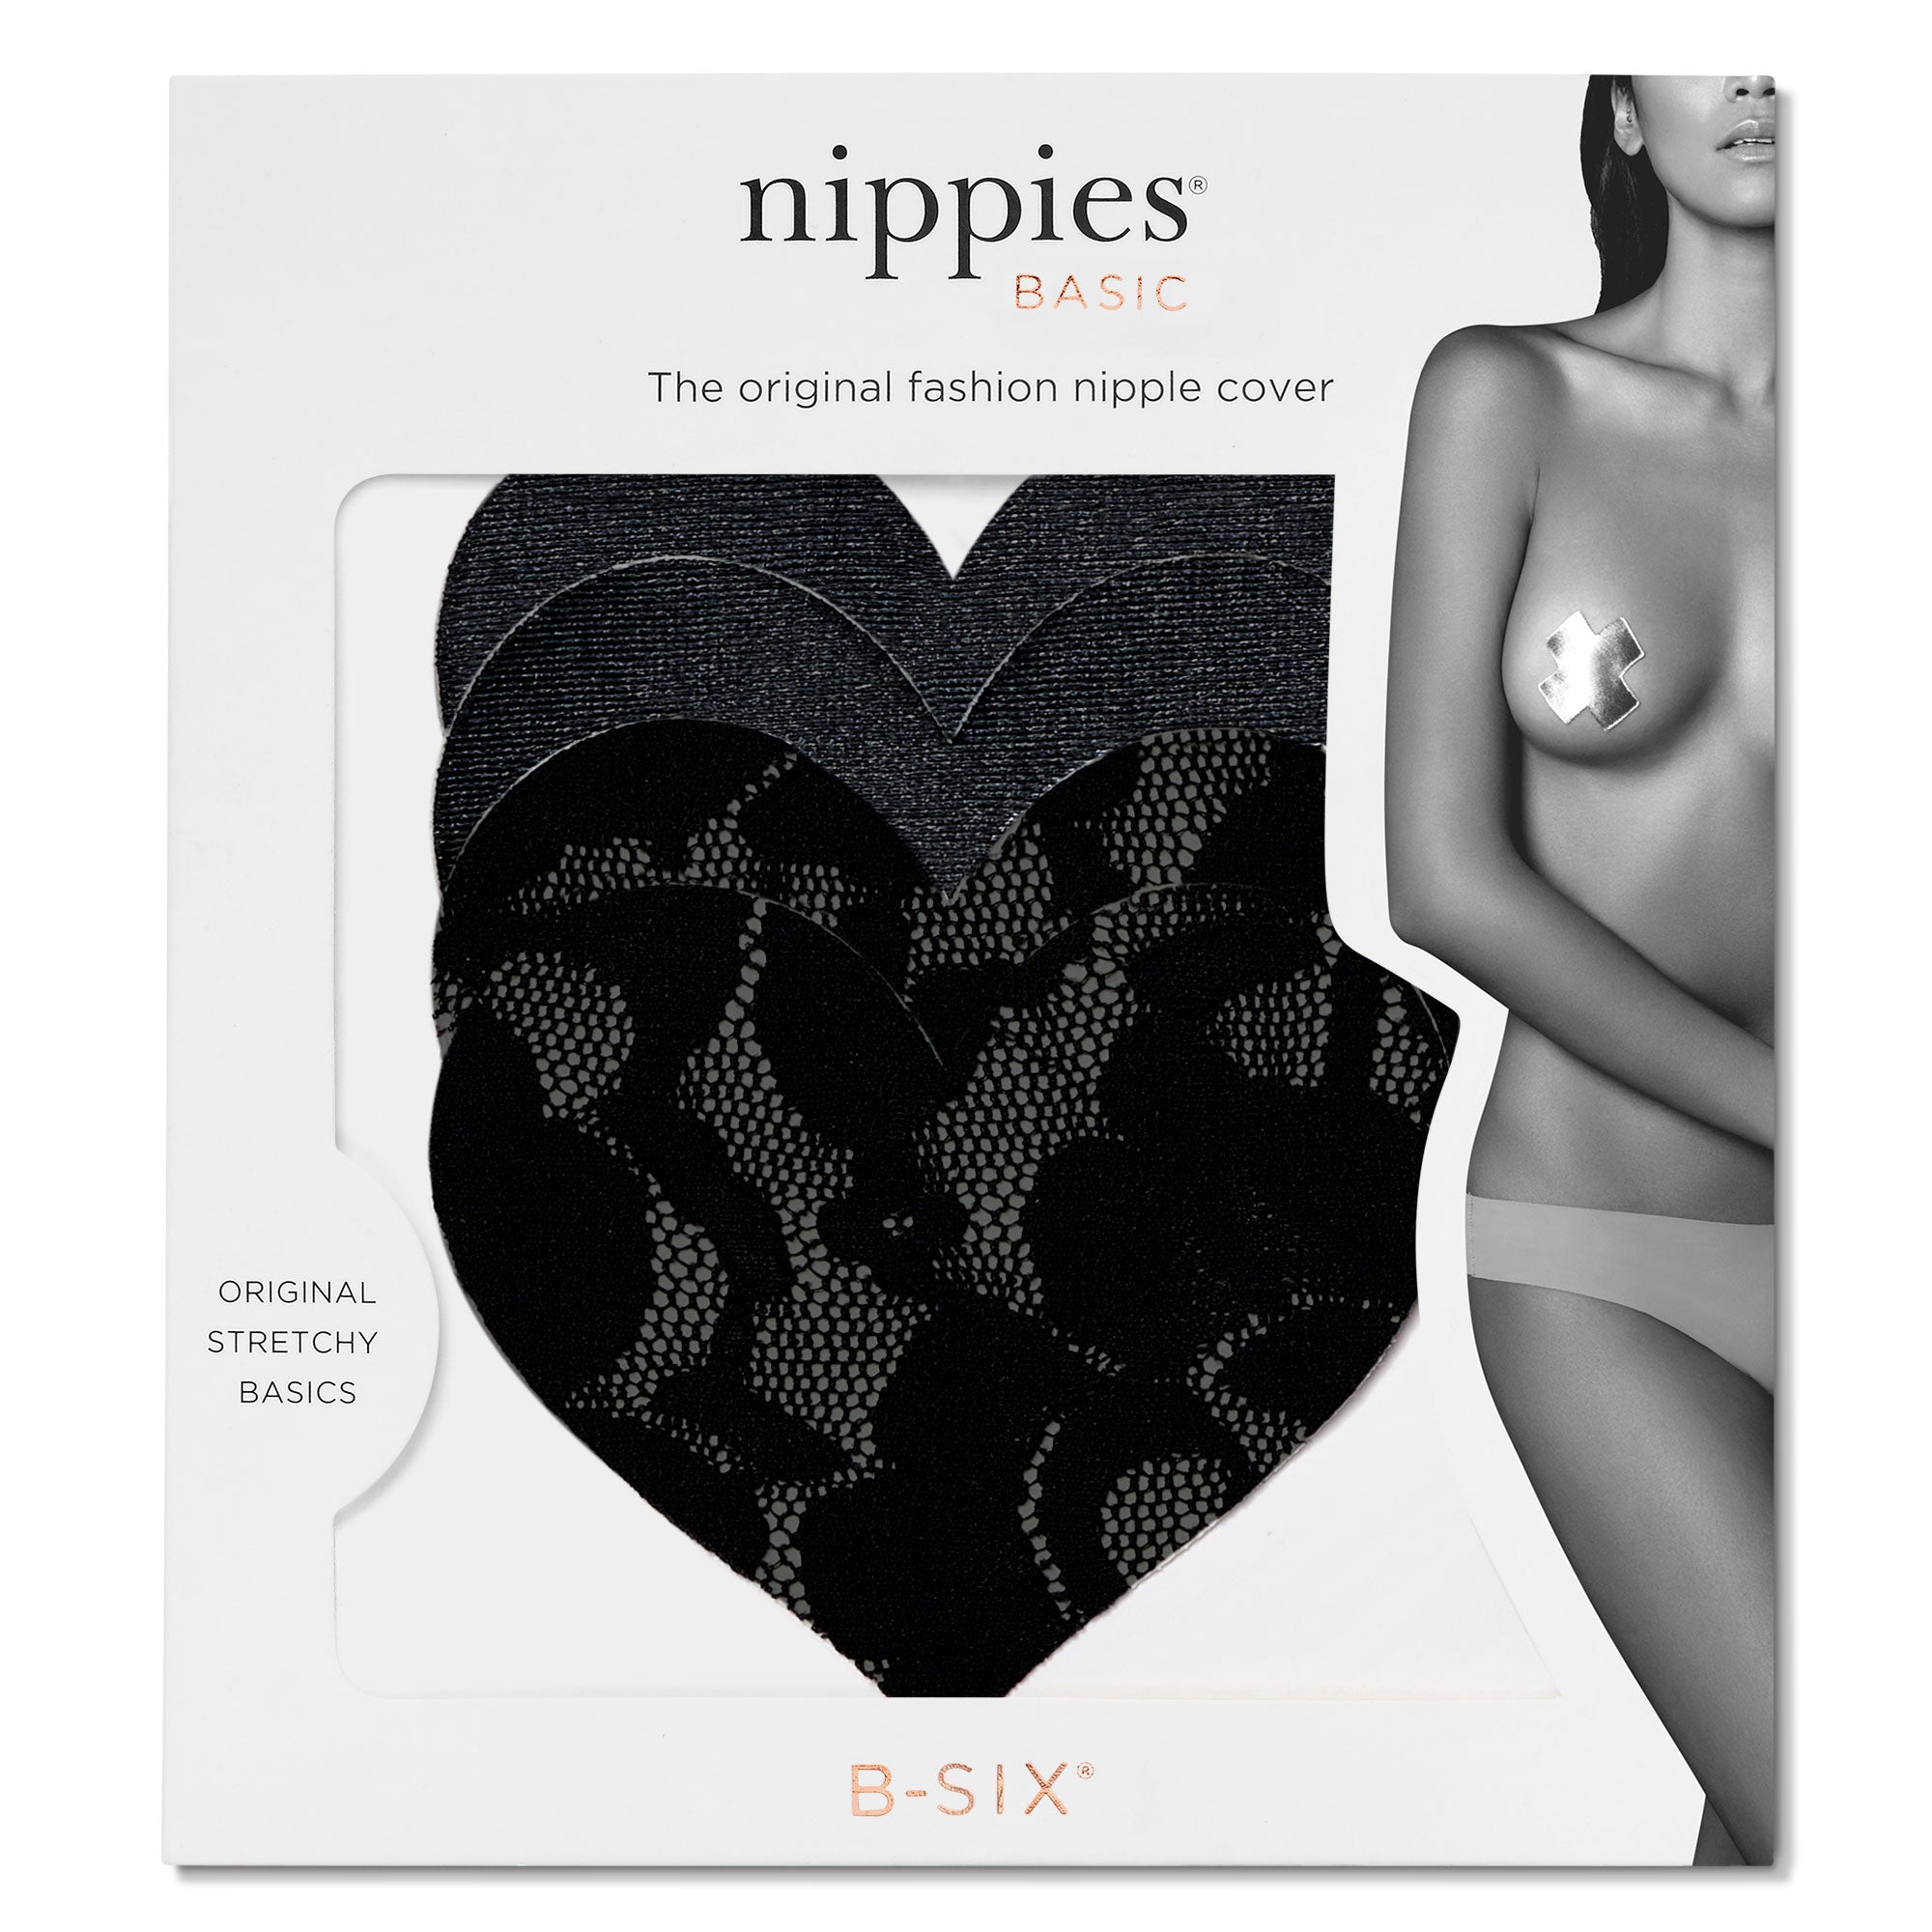 Nippies Basic Nipple Covers